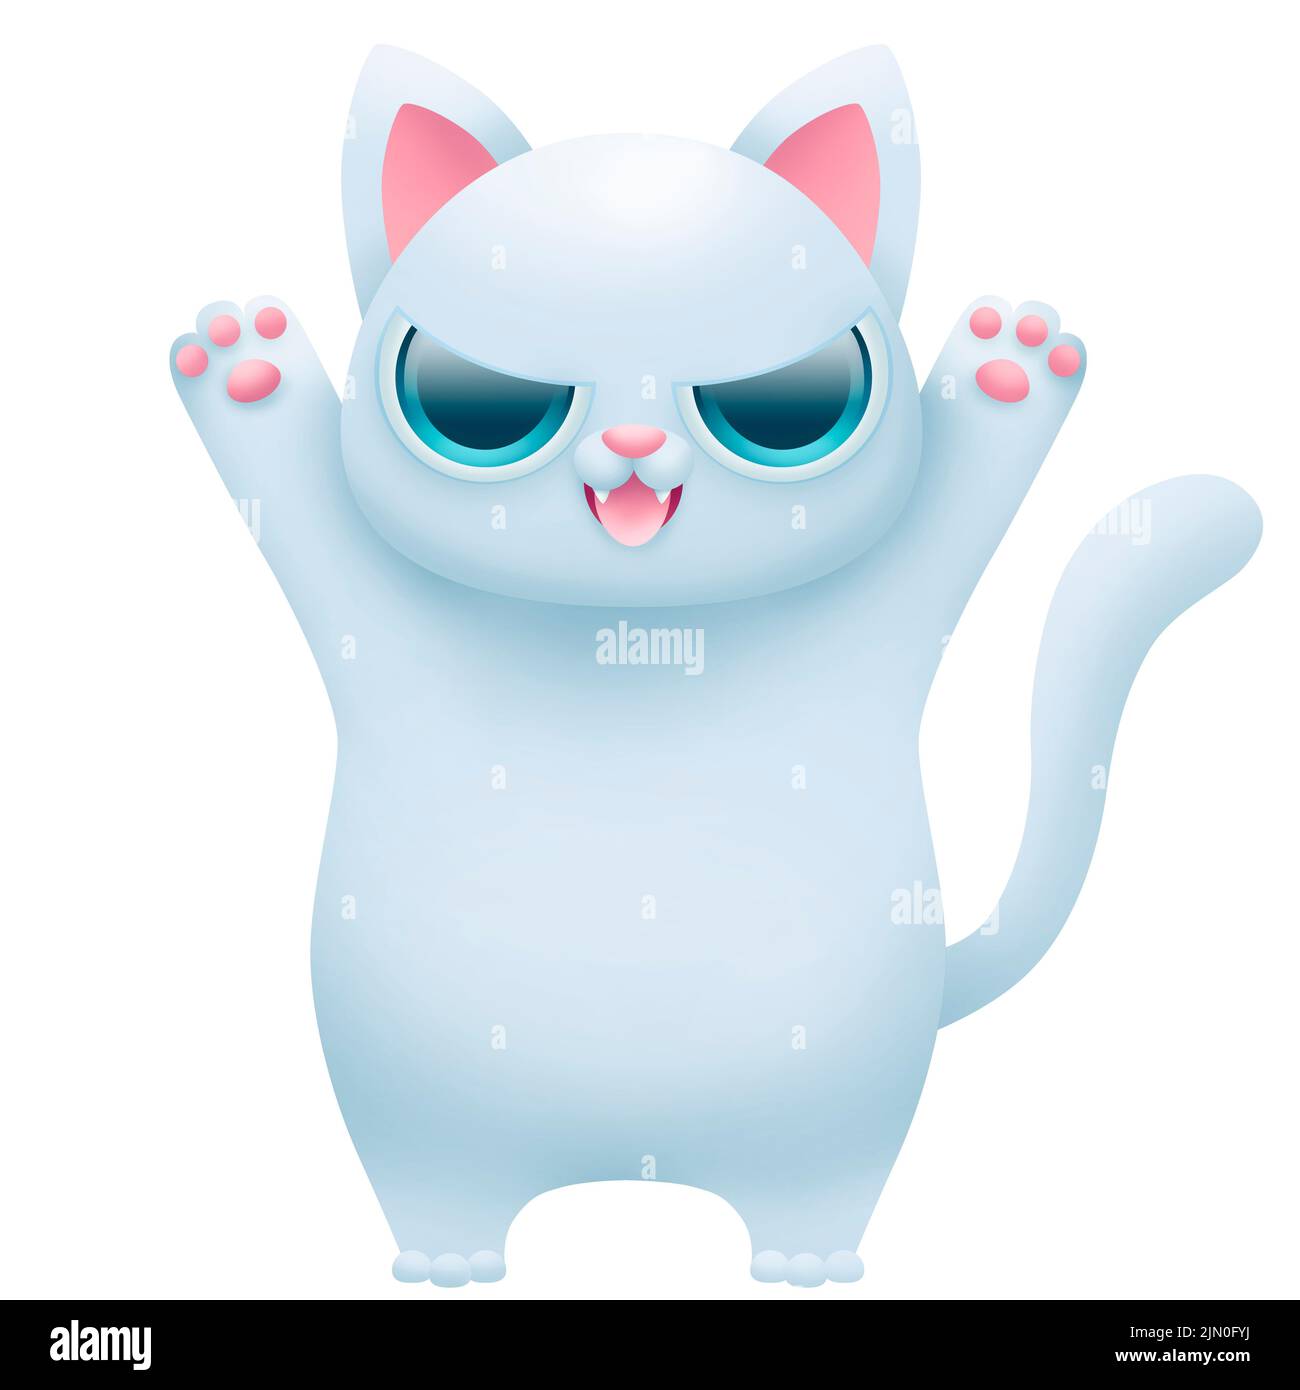 Cute White Cat Angry Cartoon